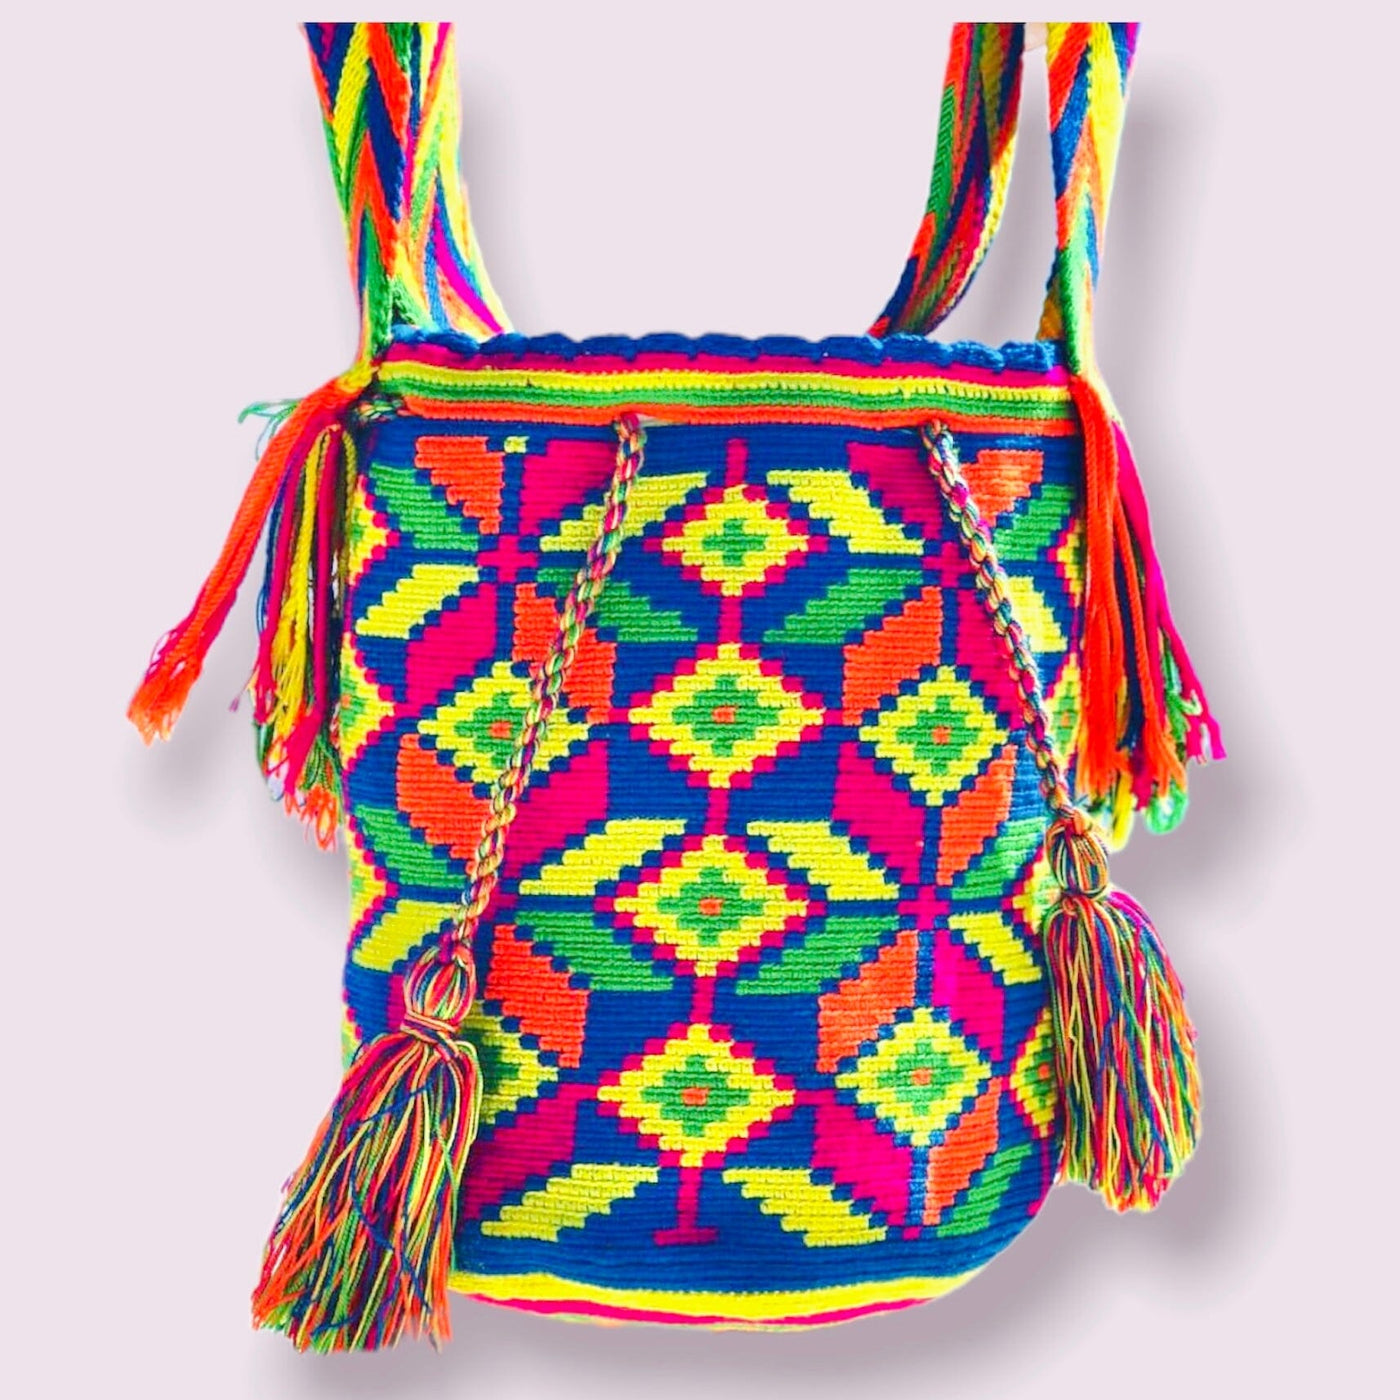 Neon Beach Bag for Summer | Crochet Beach Bag | Colorful4U